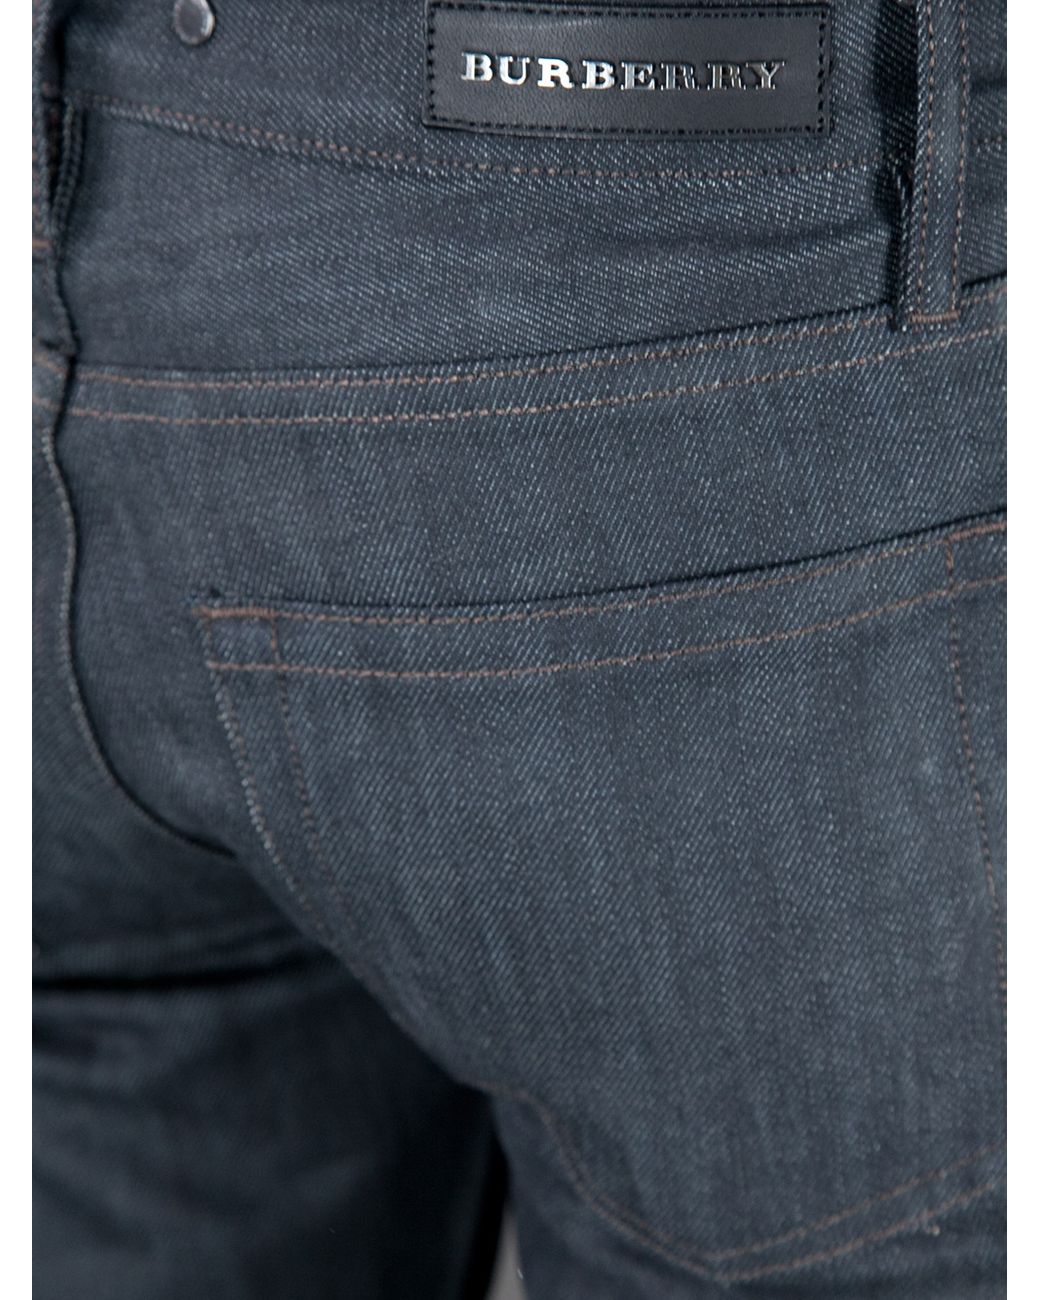 Actualizar 76+ imagen burberry jeans review - Abzlocal.mx